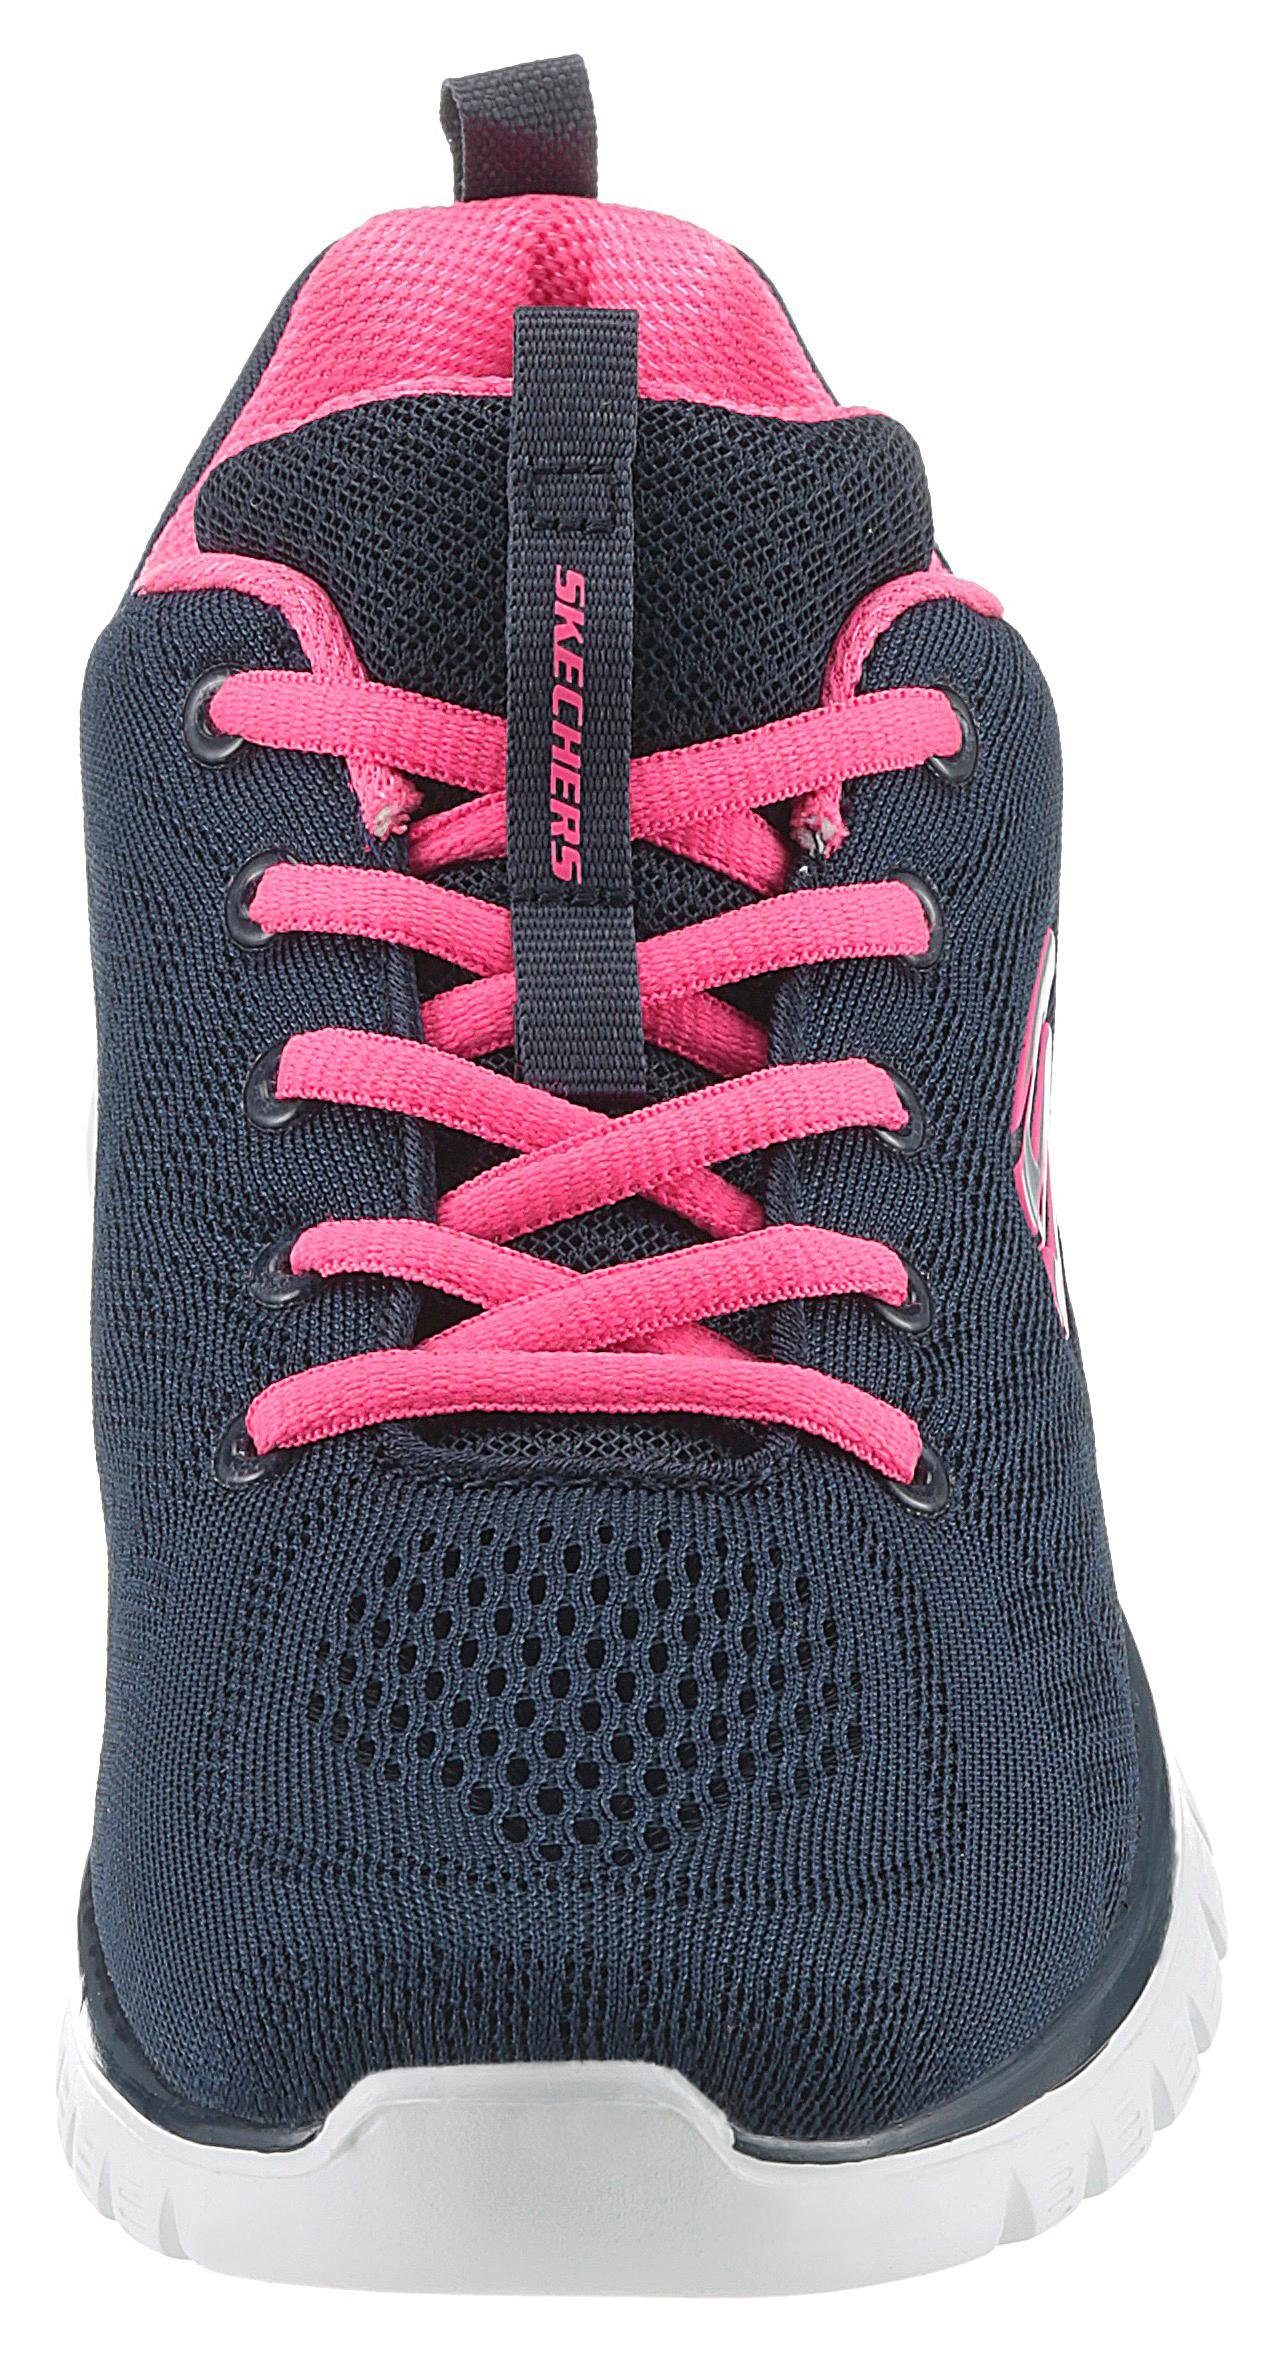 Skechers Graceful mit Get navy-pink Foam - Dämpfung Connected Sneaker durch Memory